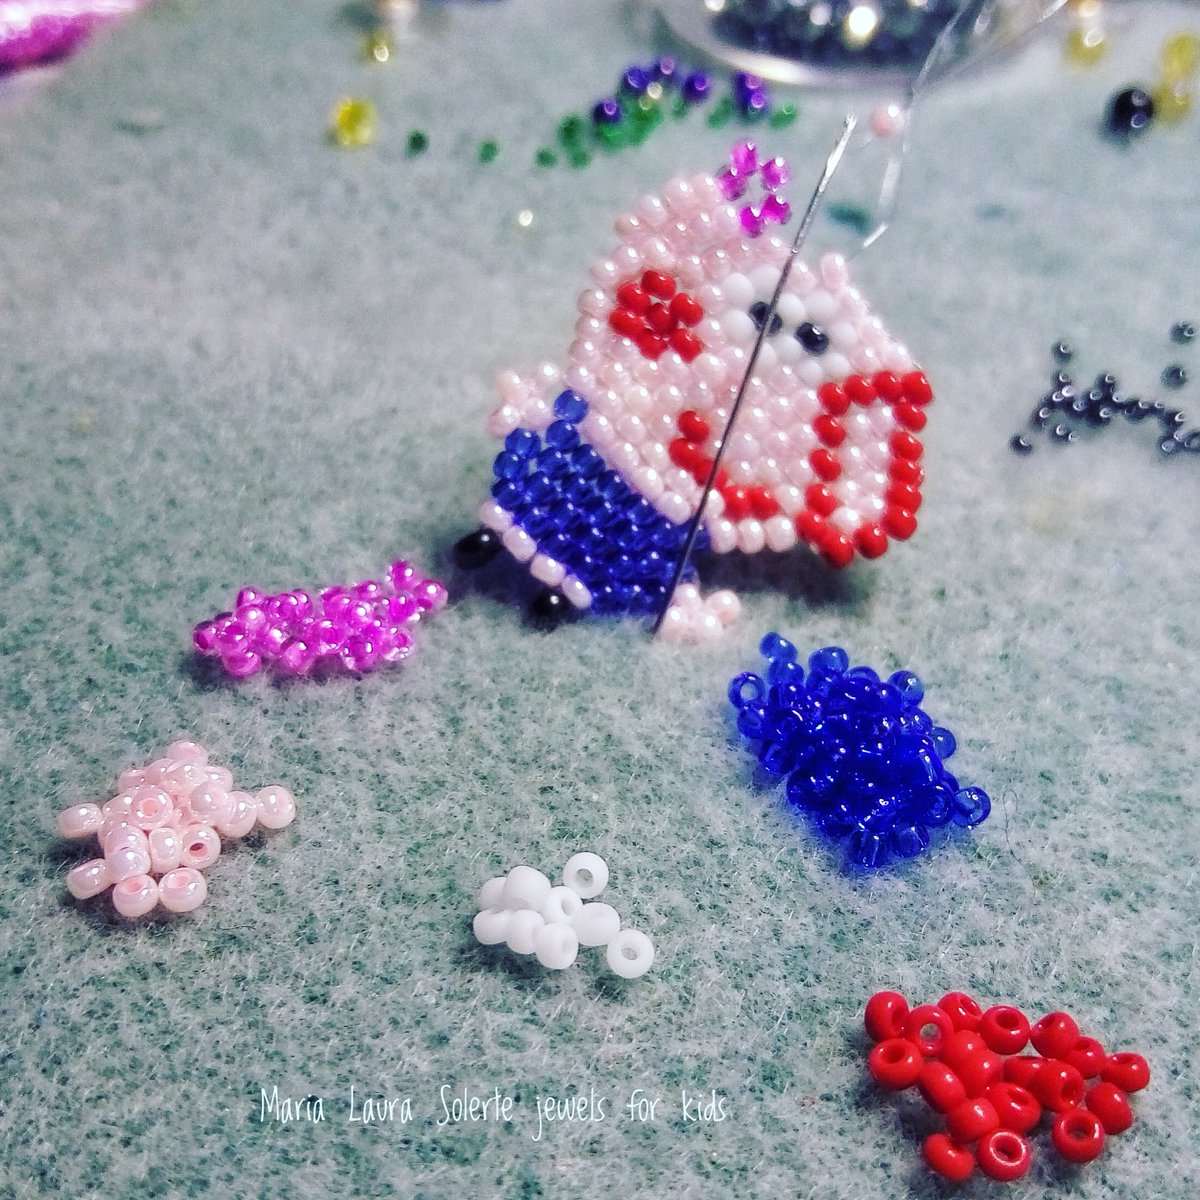 Almost done 😁 #seedbeads #miyuki #miyukiseedbeads #beadwork #seedbeadsjewelry #giftideas #kids #kid #baby #milano #varese #marialaurasolertejewels #bijoux #handmade #accessories #gift #handcrafted #pendant #ciondolo #george #pig #peppapig #pic #shot